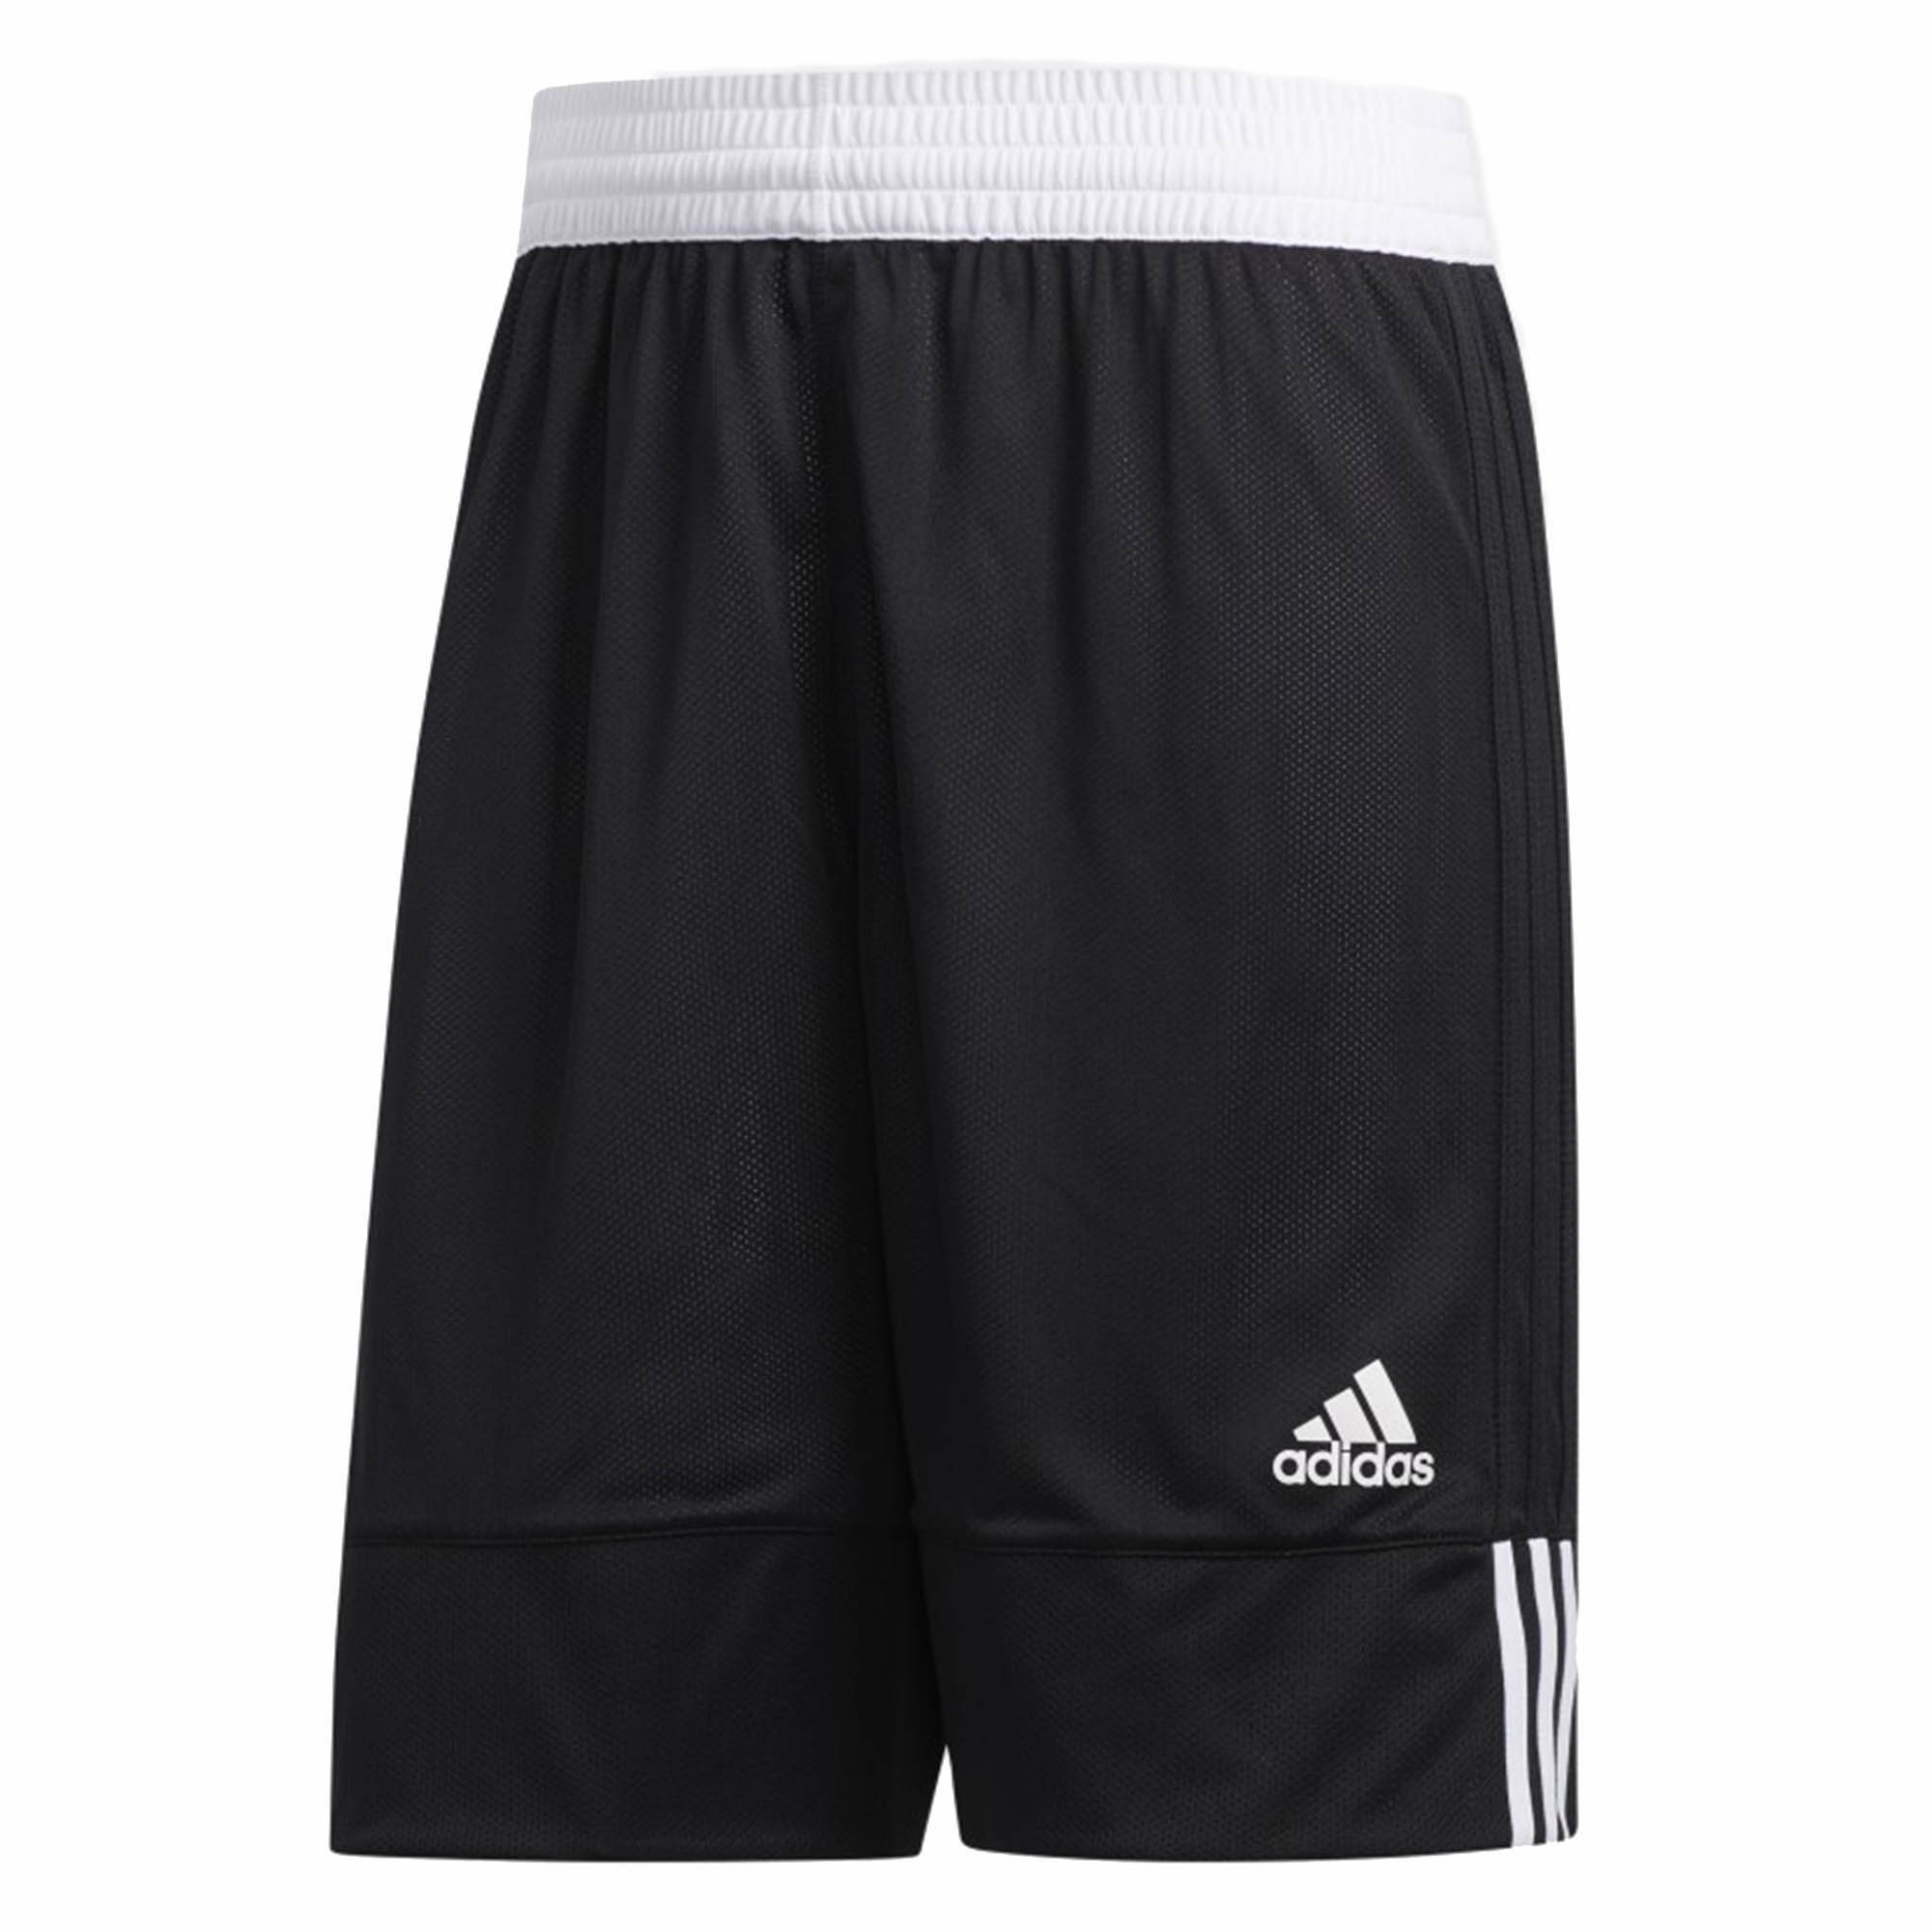 Баскетбольные двухсторонние шорты Adidas 3G Speed - картинка